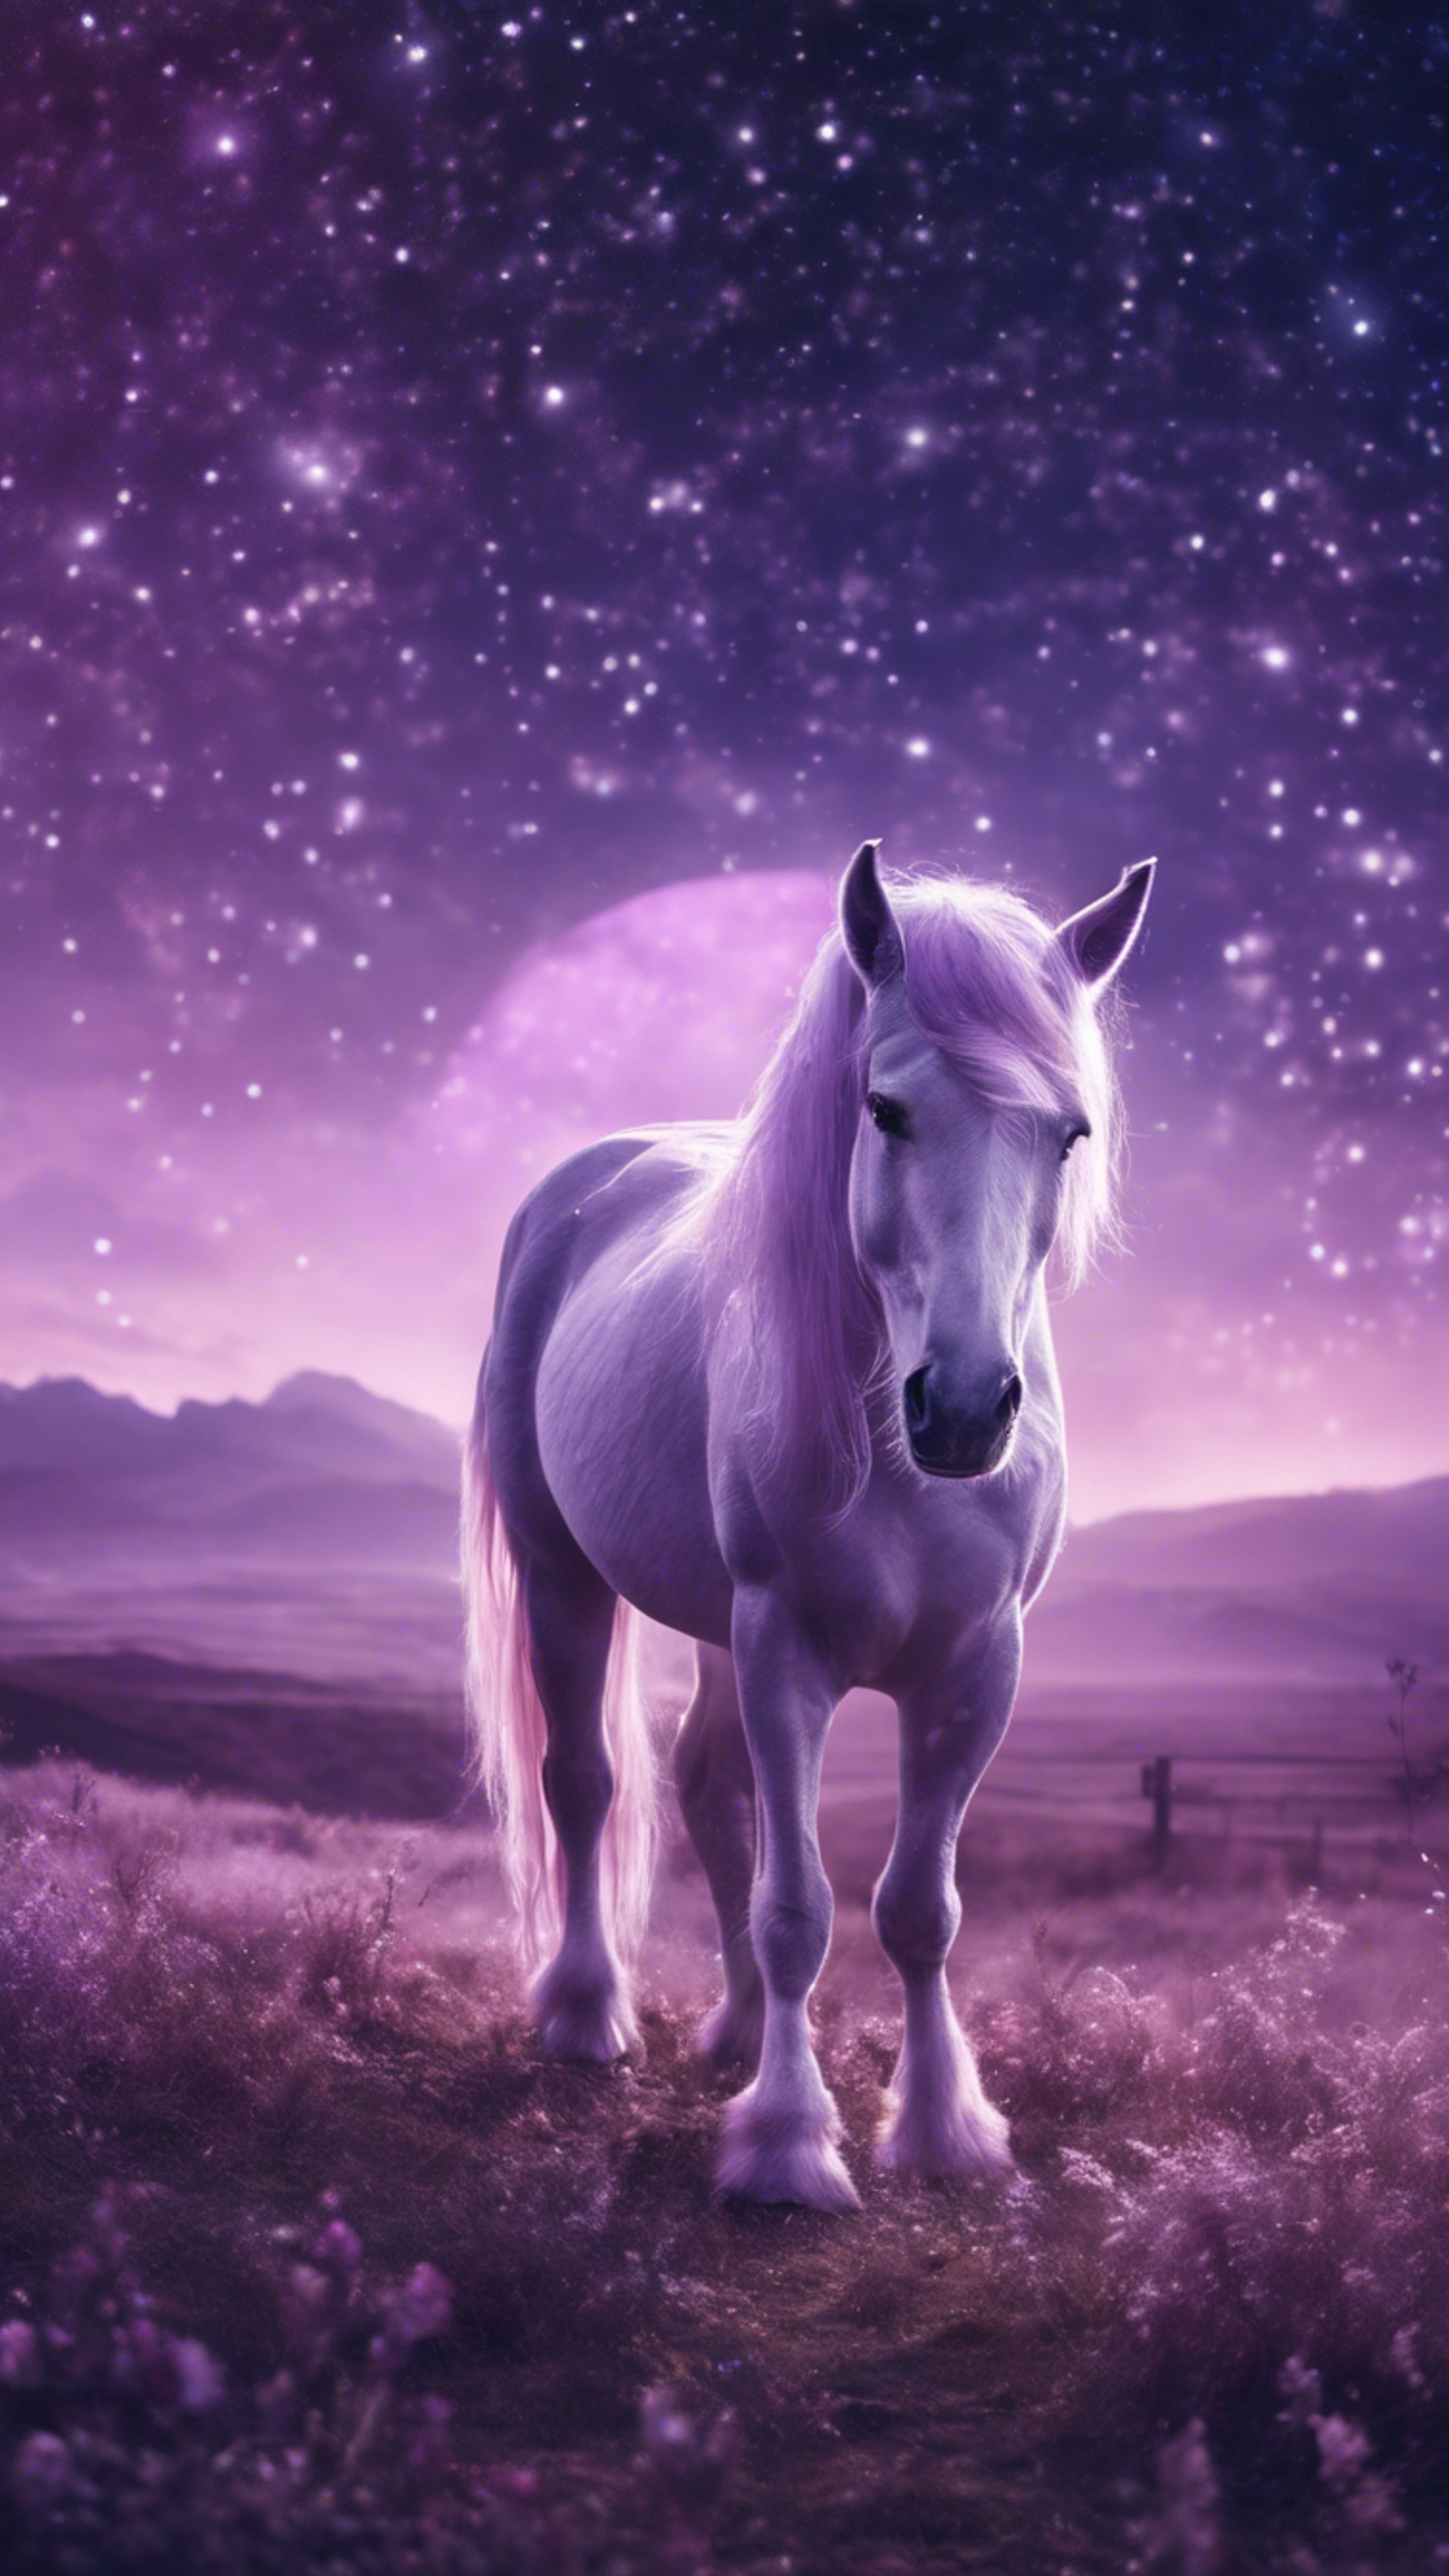 A light purple unicorn grazing in a mystical landscape under the starry night. Обои[ebdebf087ad14a189ba8]